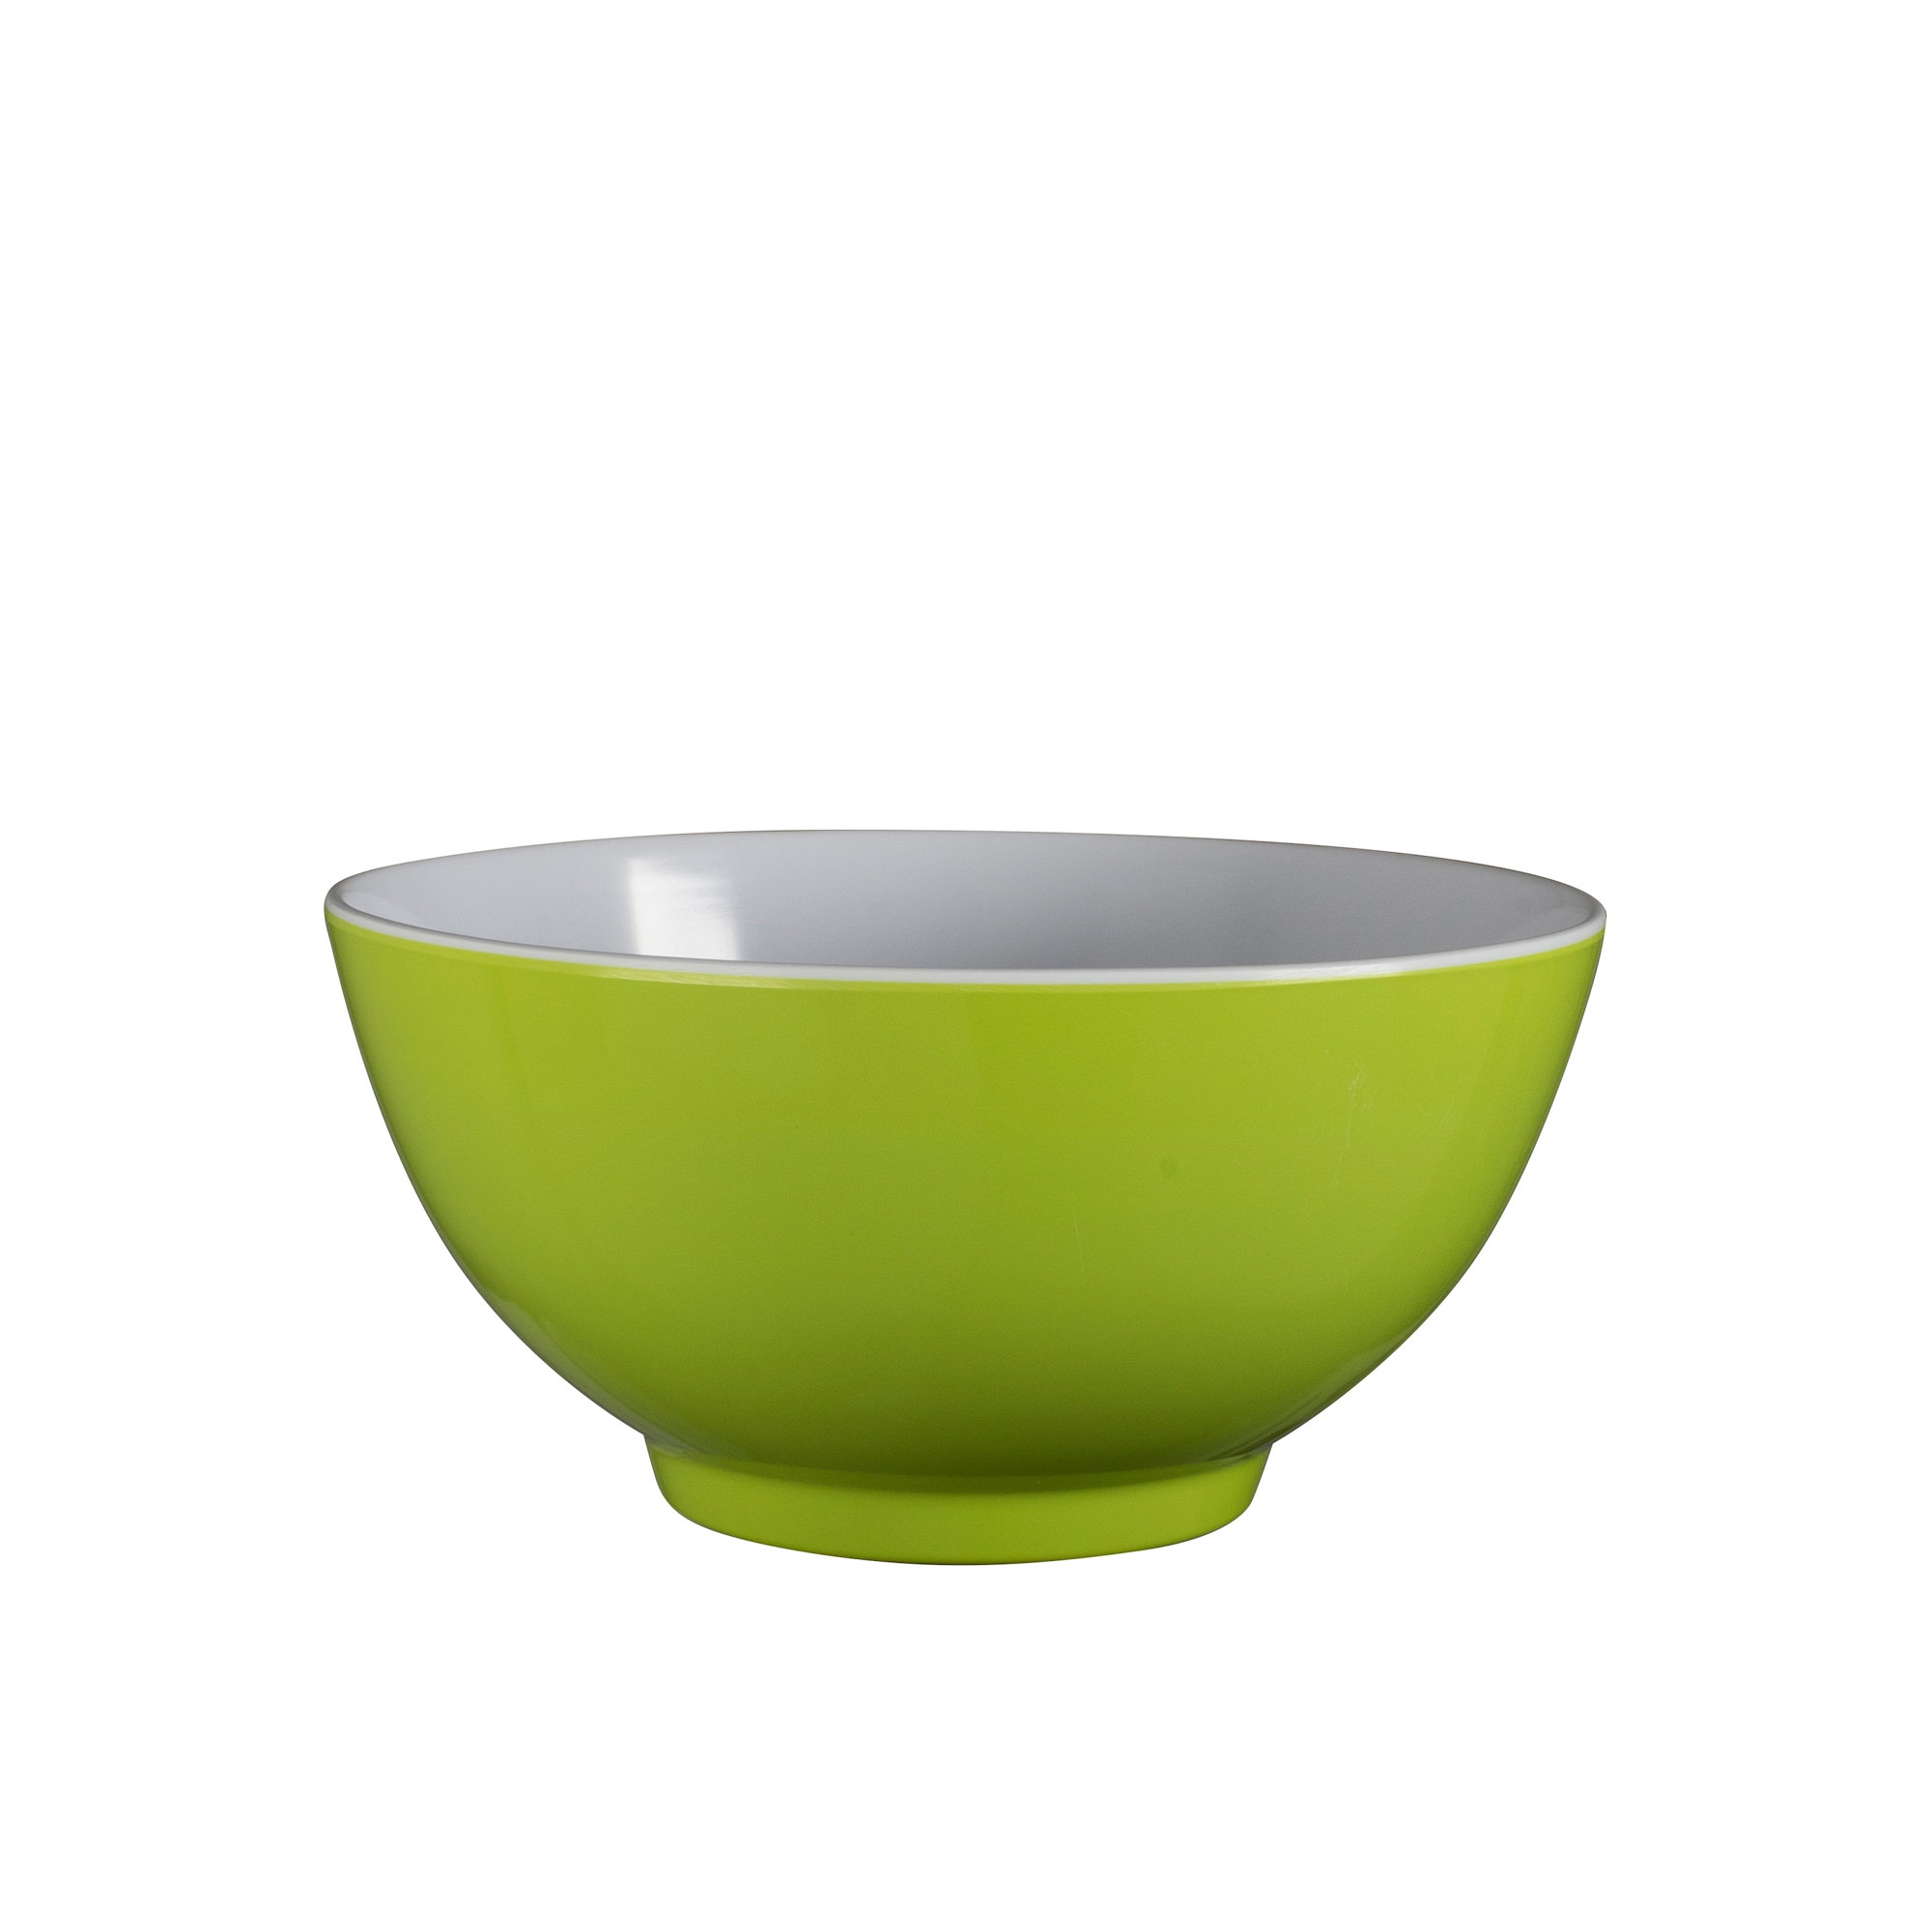 Serroni Melamine Bowl 15cm Lime Image 1